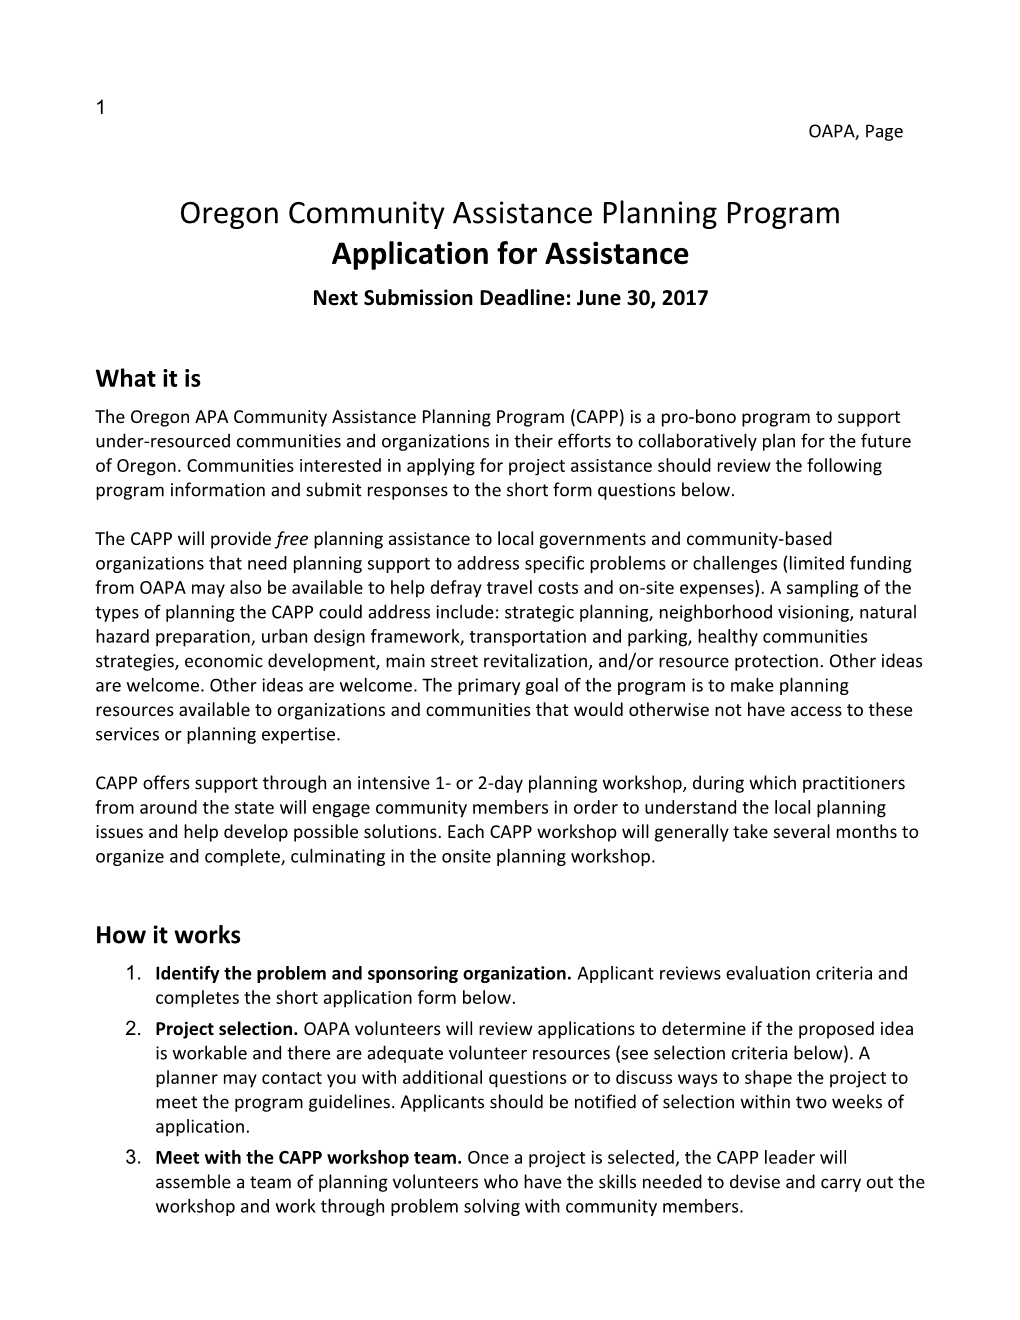 Oregon Community Assistance Planning Program